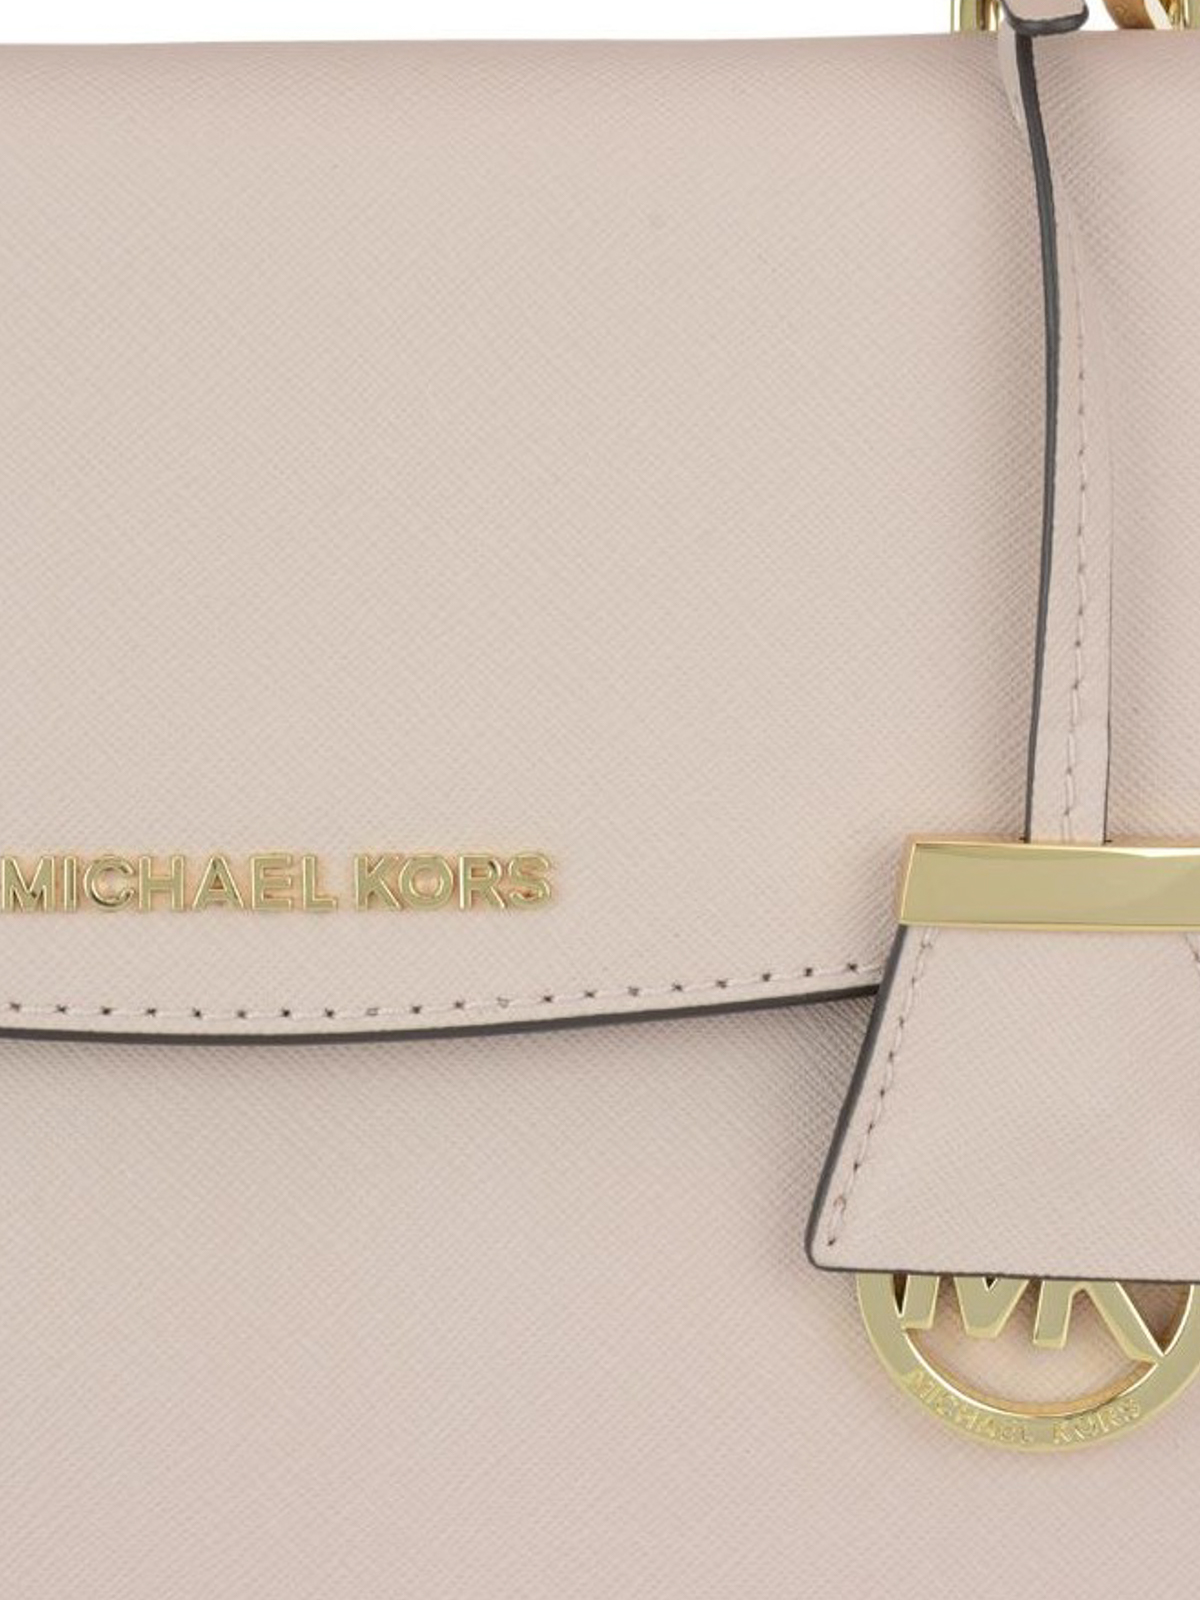 Michael Kors  Bags  Nwt Michael Kors Ava Saffiano Leather Small Top  Handle Satchel Bag Pale Pink  Poshmark